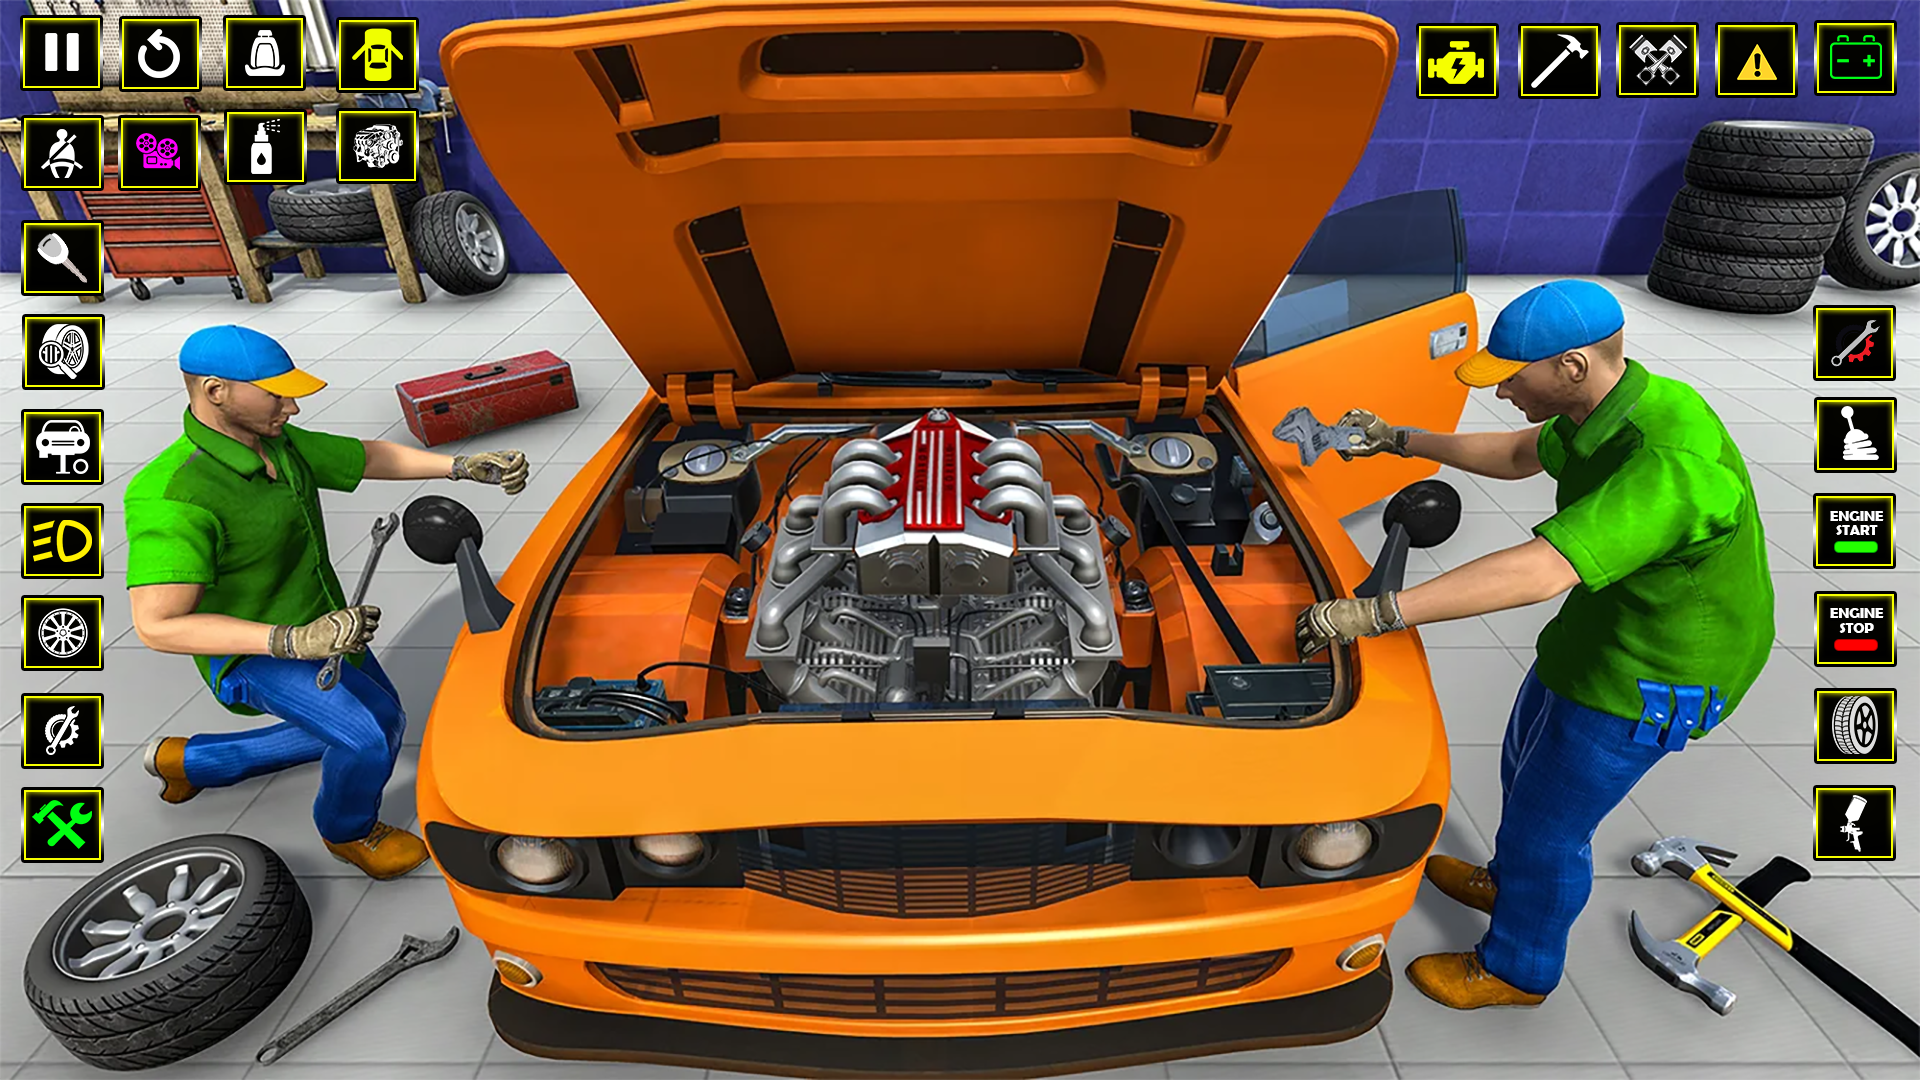 Screenshot 1 of เกมจำลองช่างซ่อมรถยนต์ 3 มิติ 1.0.20